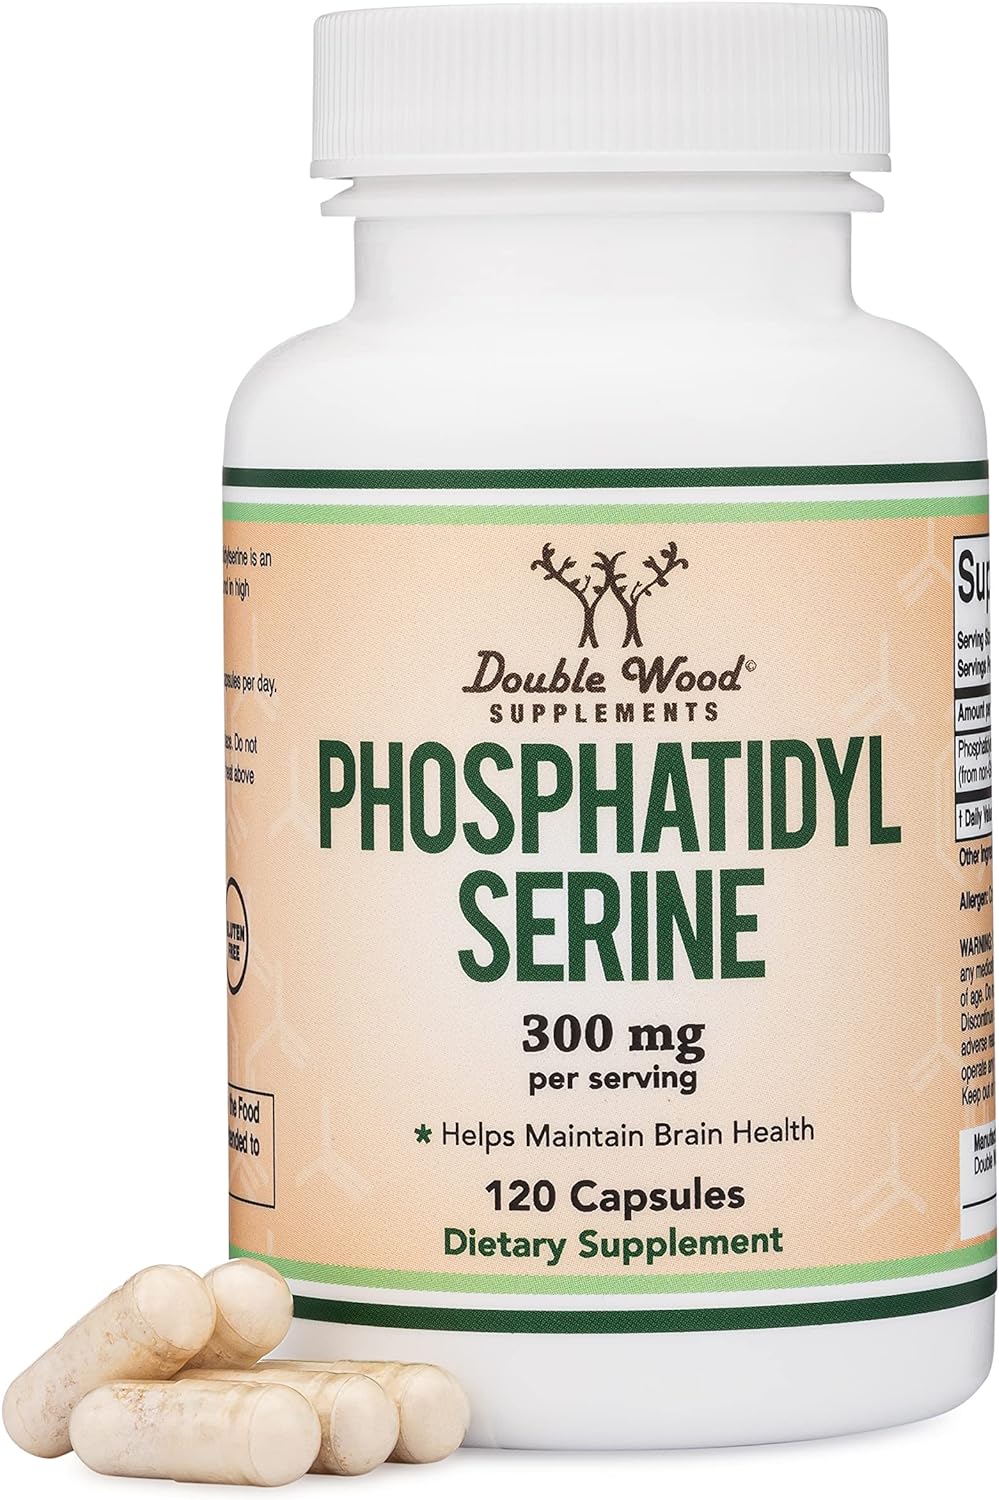 PhosphatidylSerine Supplement 300mg Per Serving, Manufa